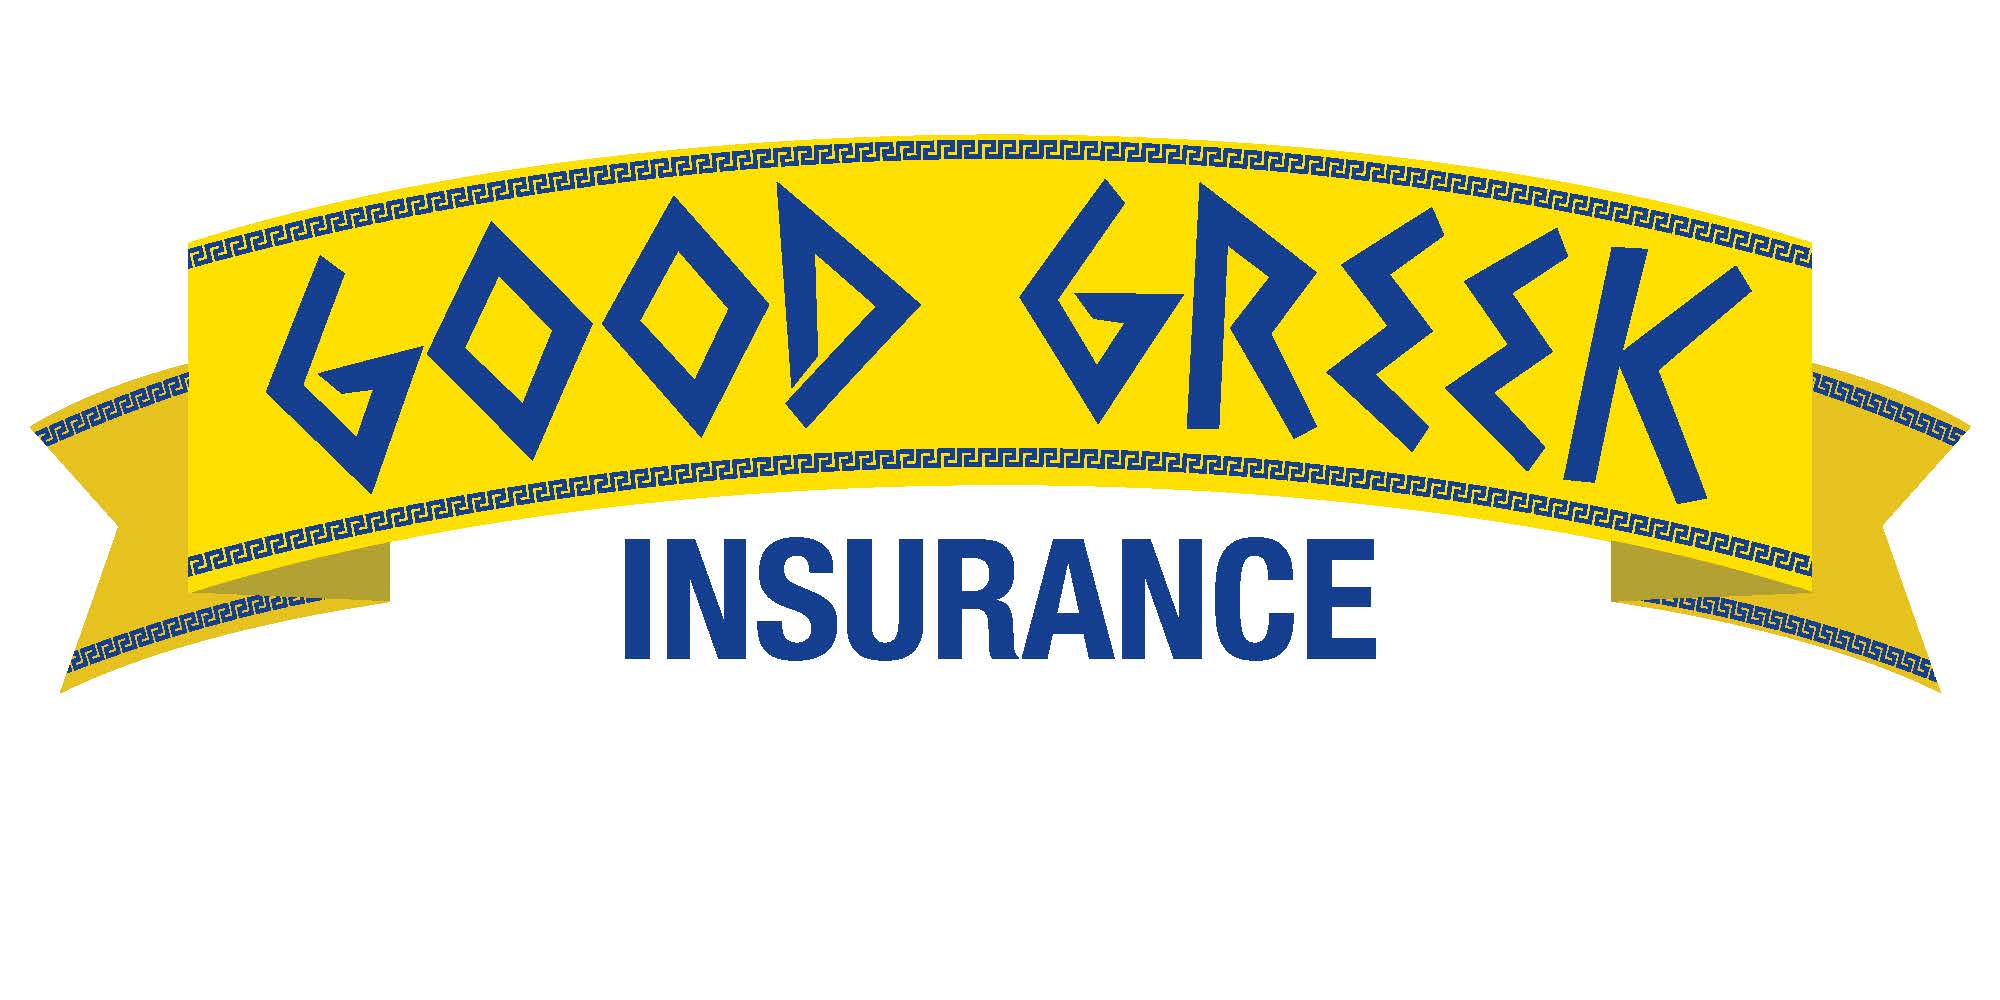 Good Green Insurance 